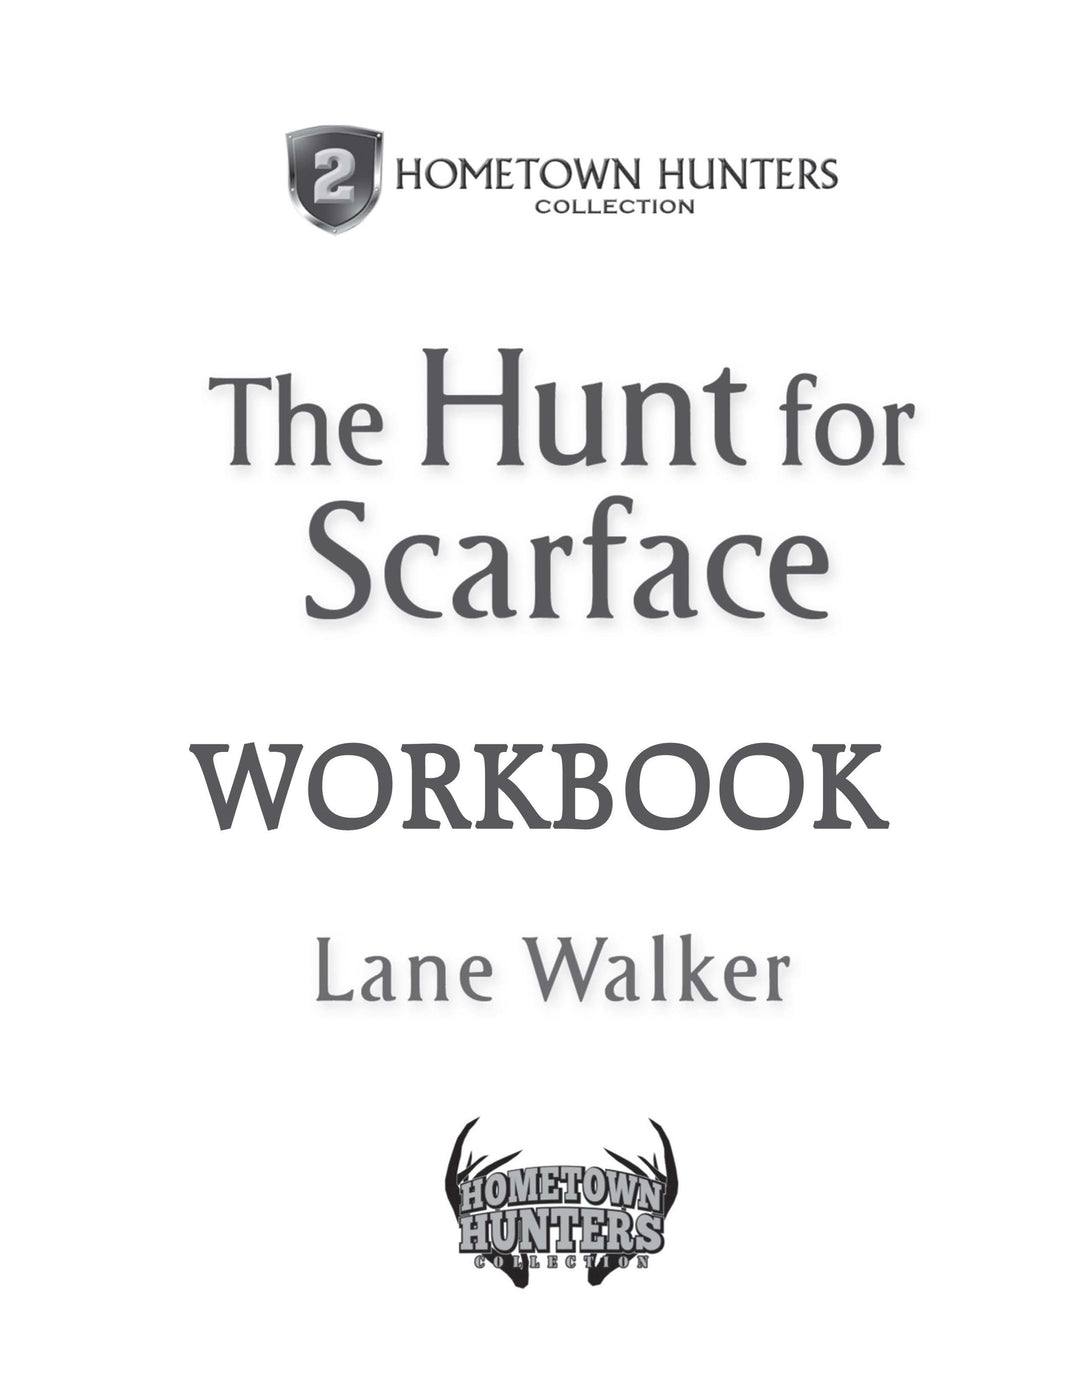 Printable Workbooks - Hometown Hunters